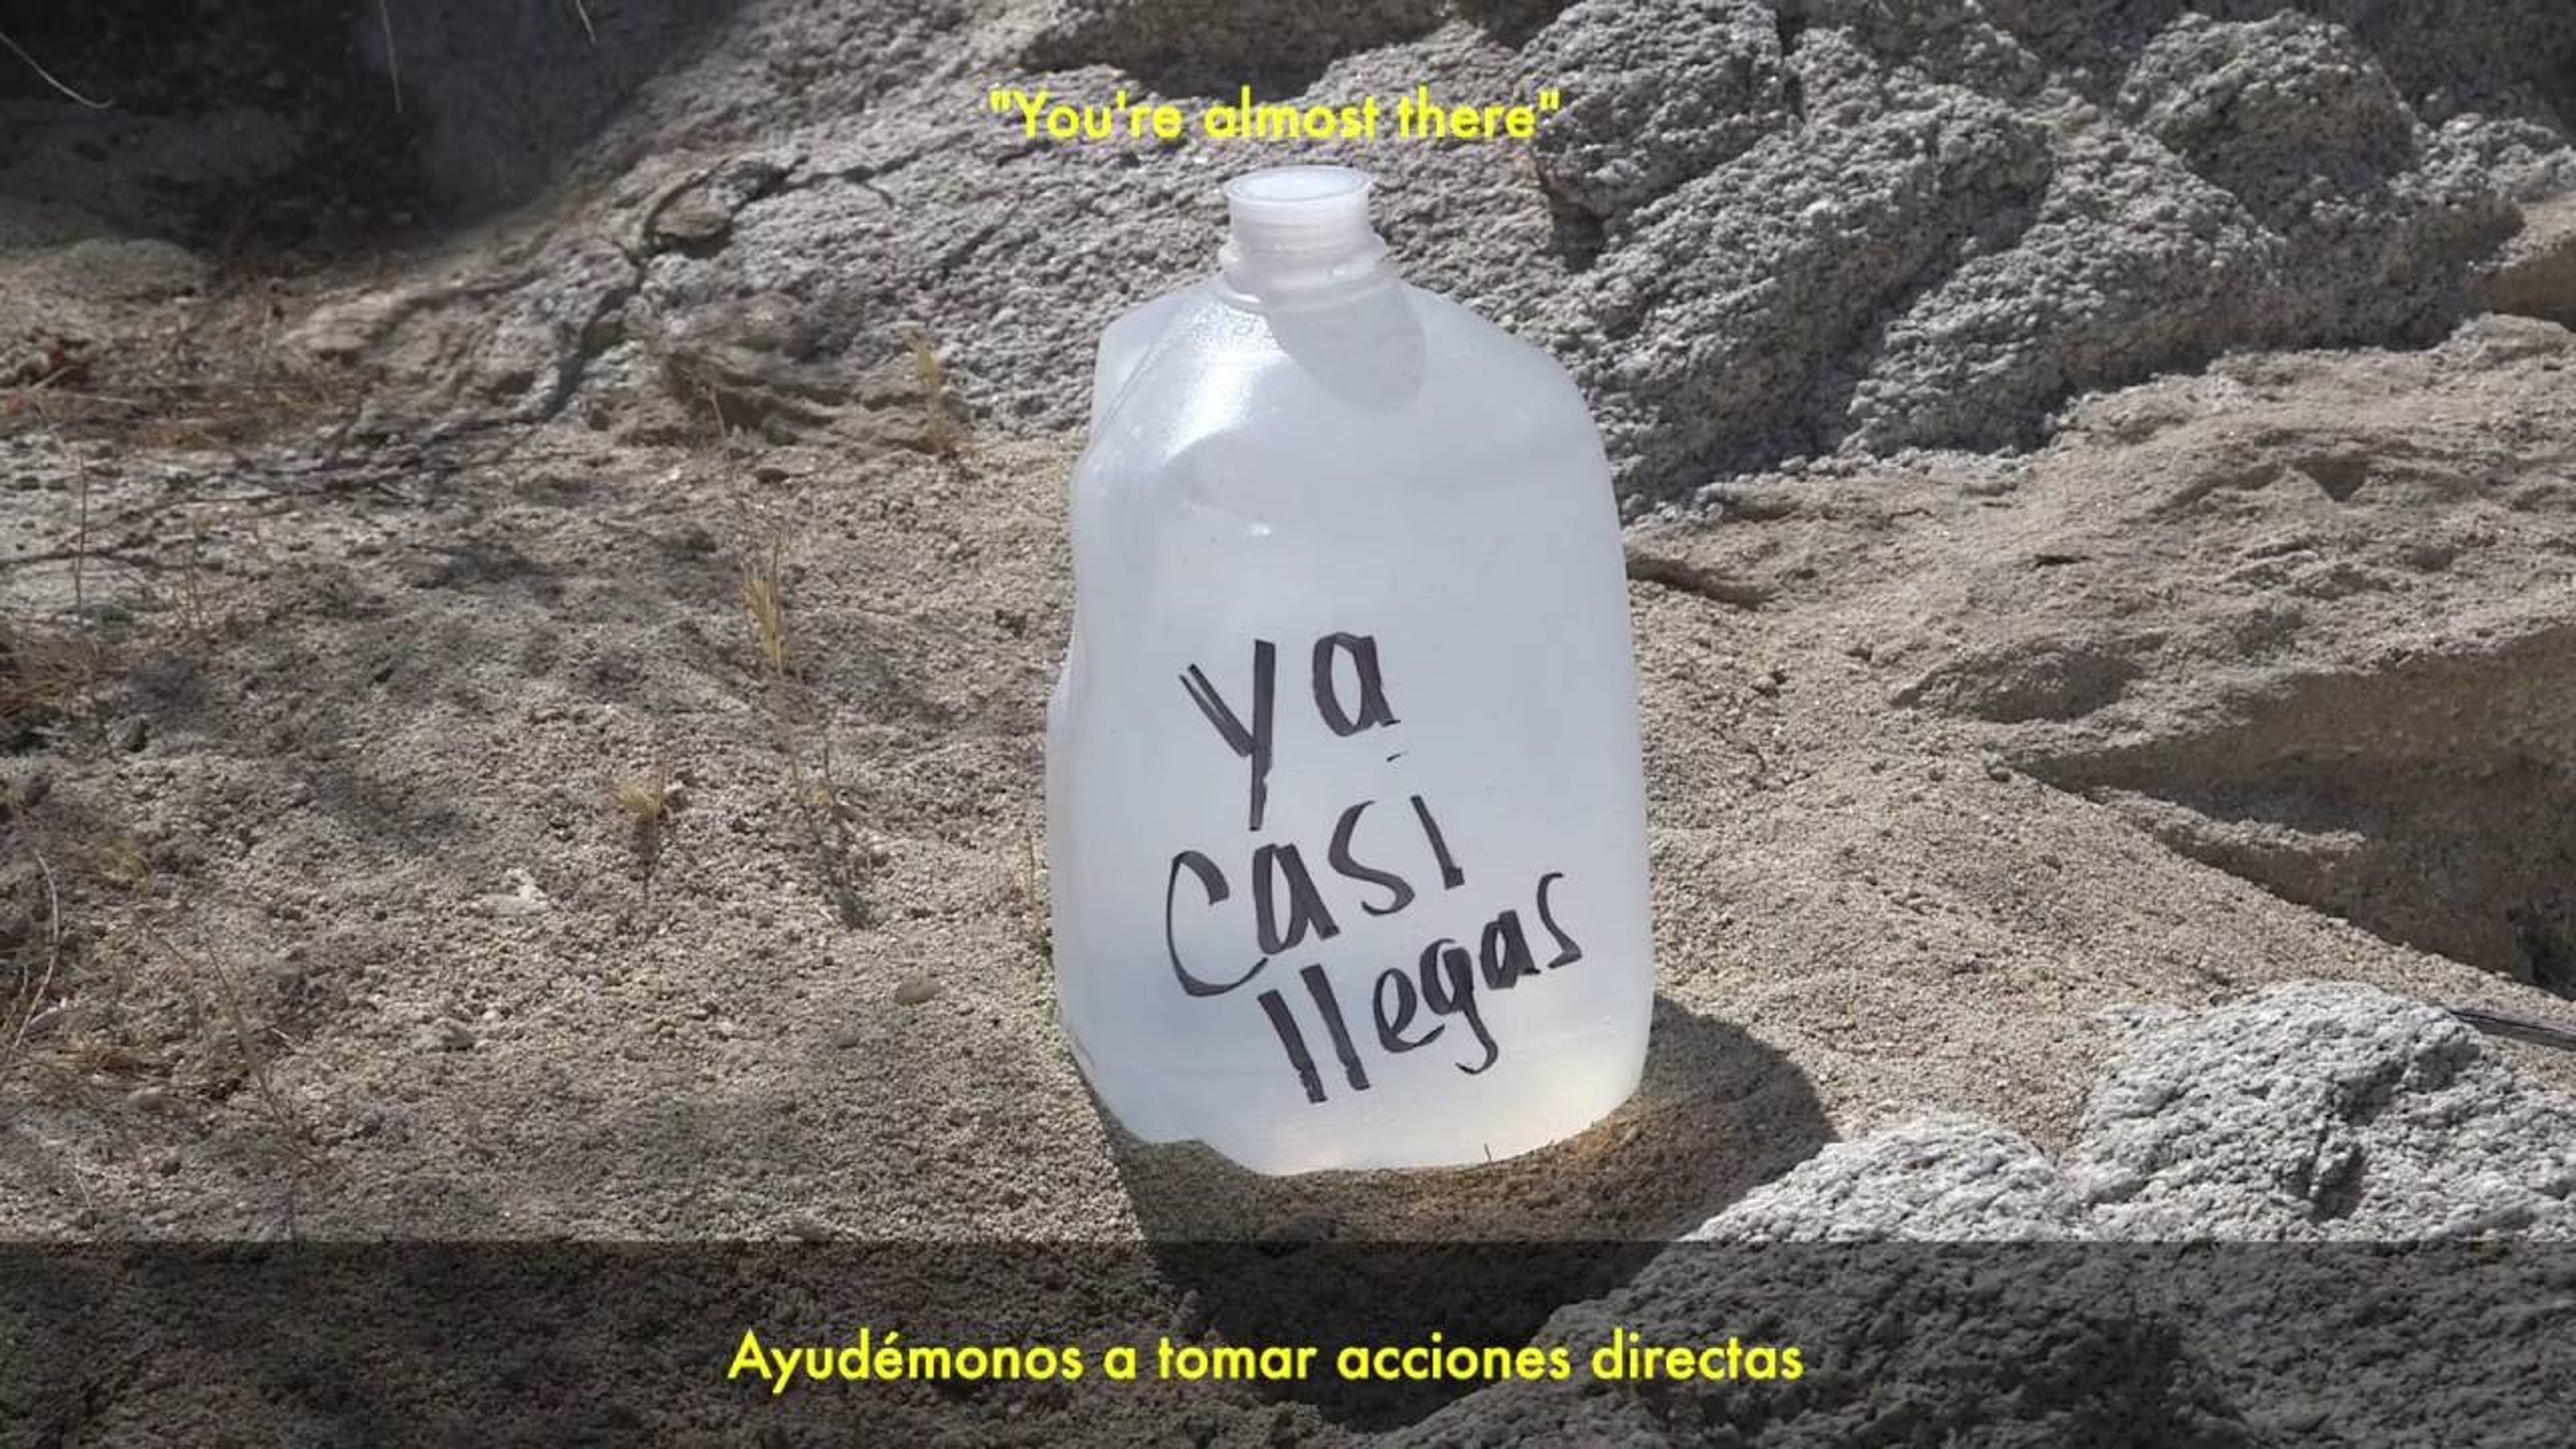 Water bottle on a rock. On the bottle, in handwriting: 